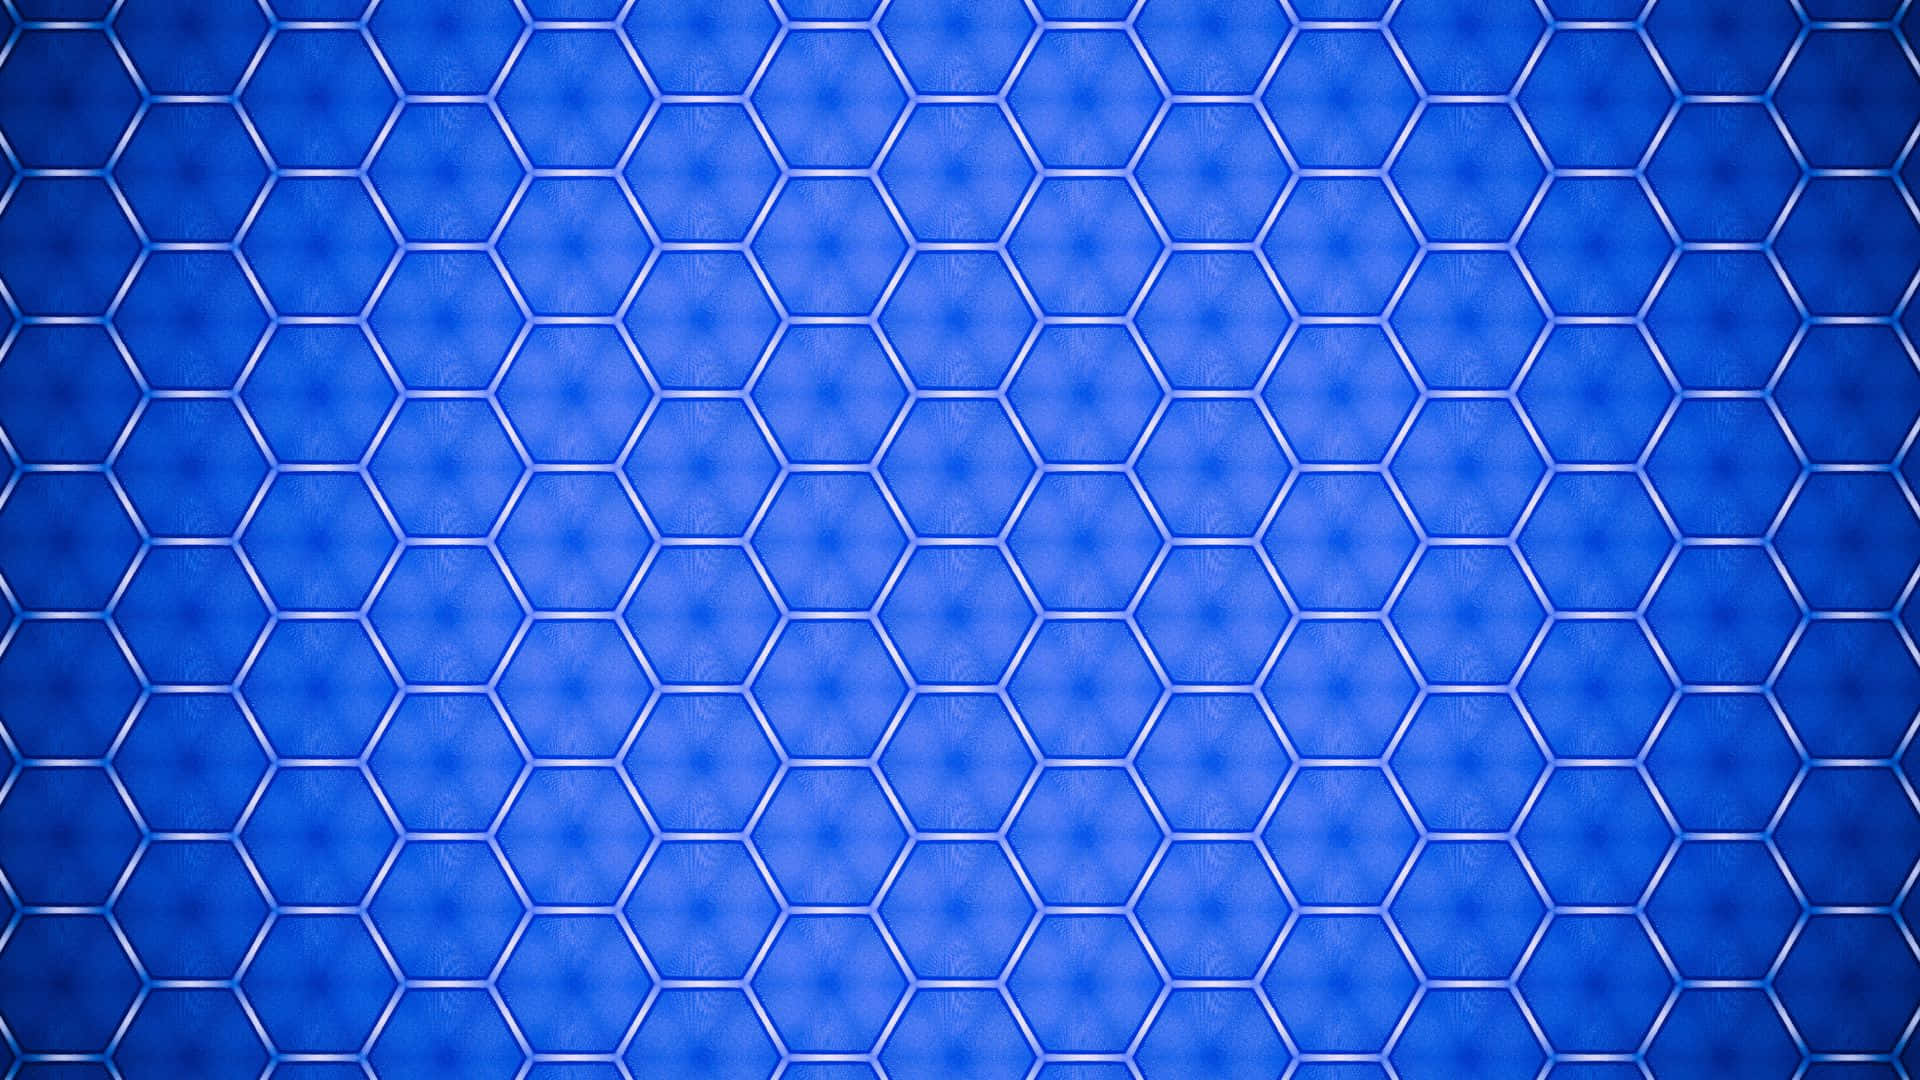 Hexagonal Pattern Blue PC Wallpaper